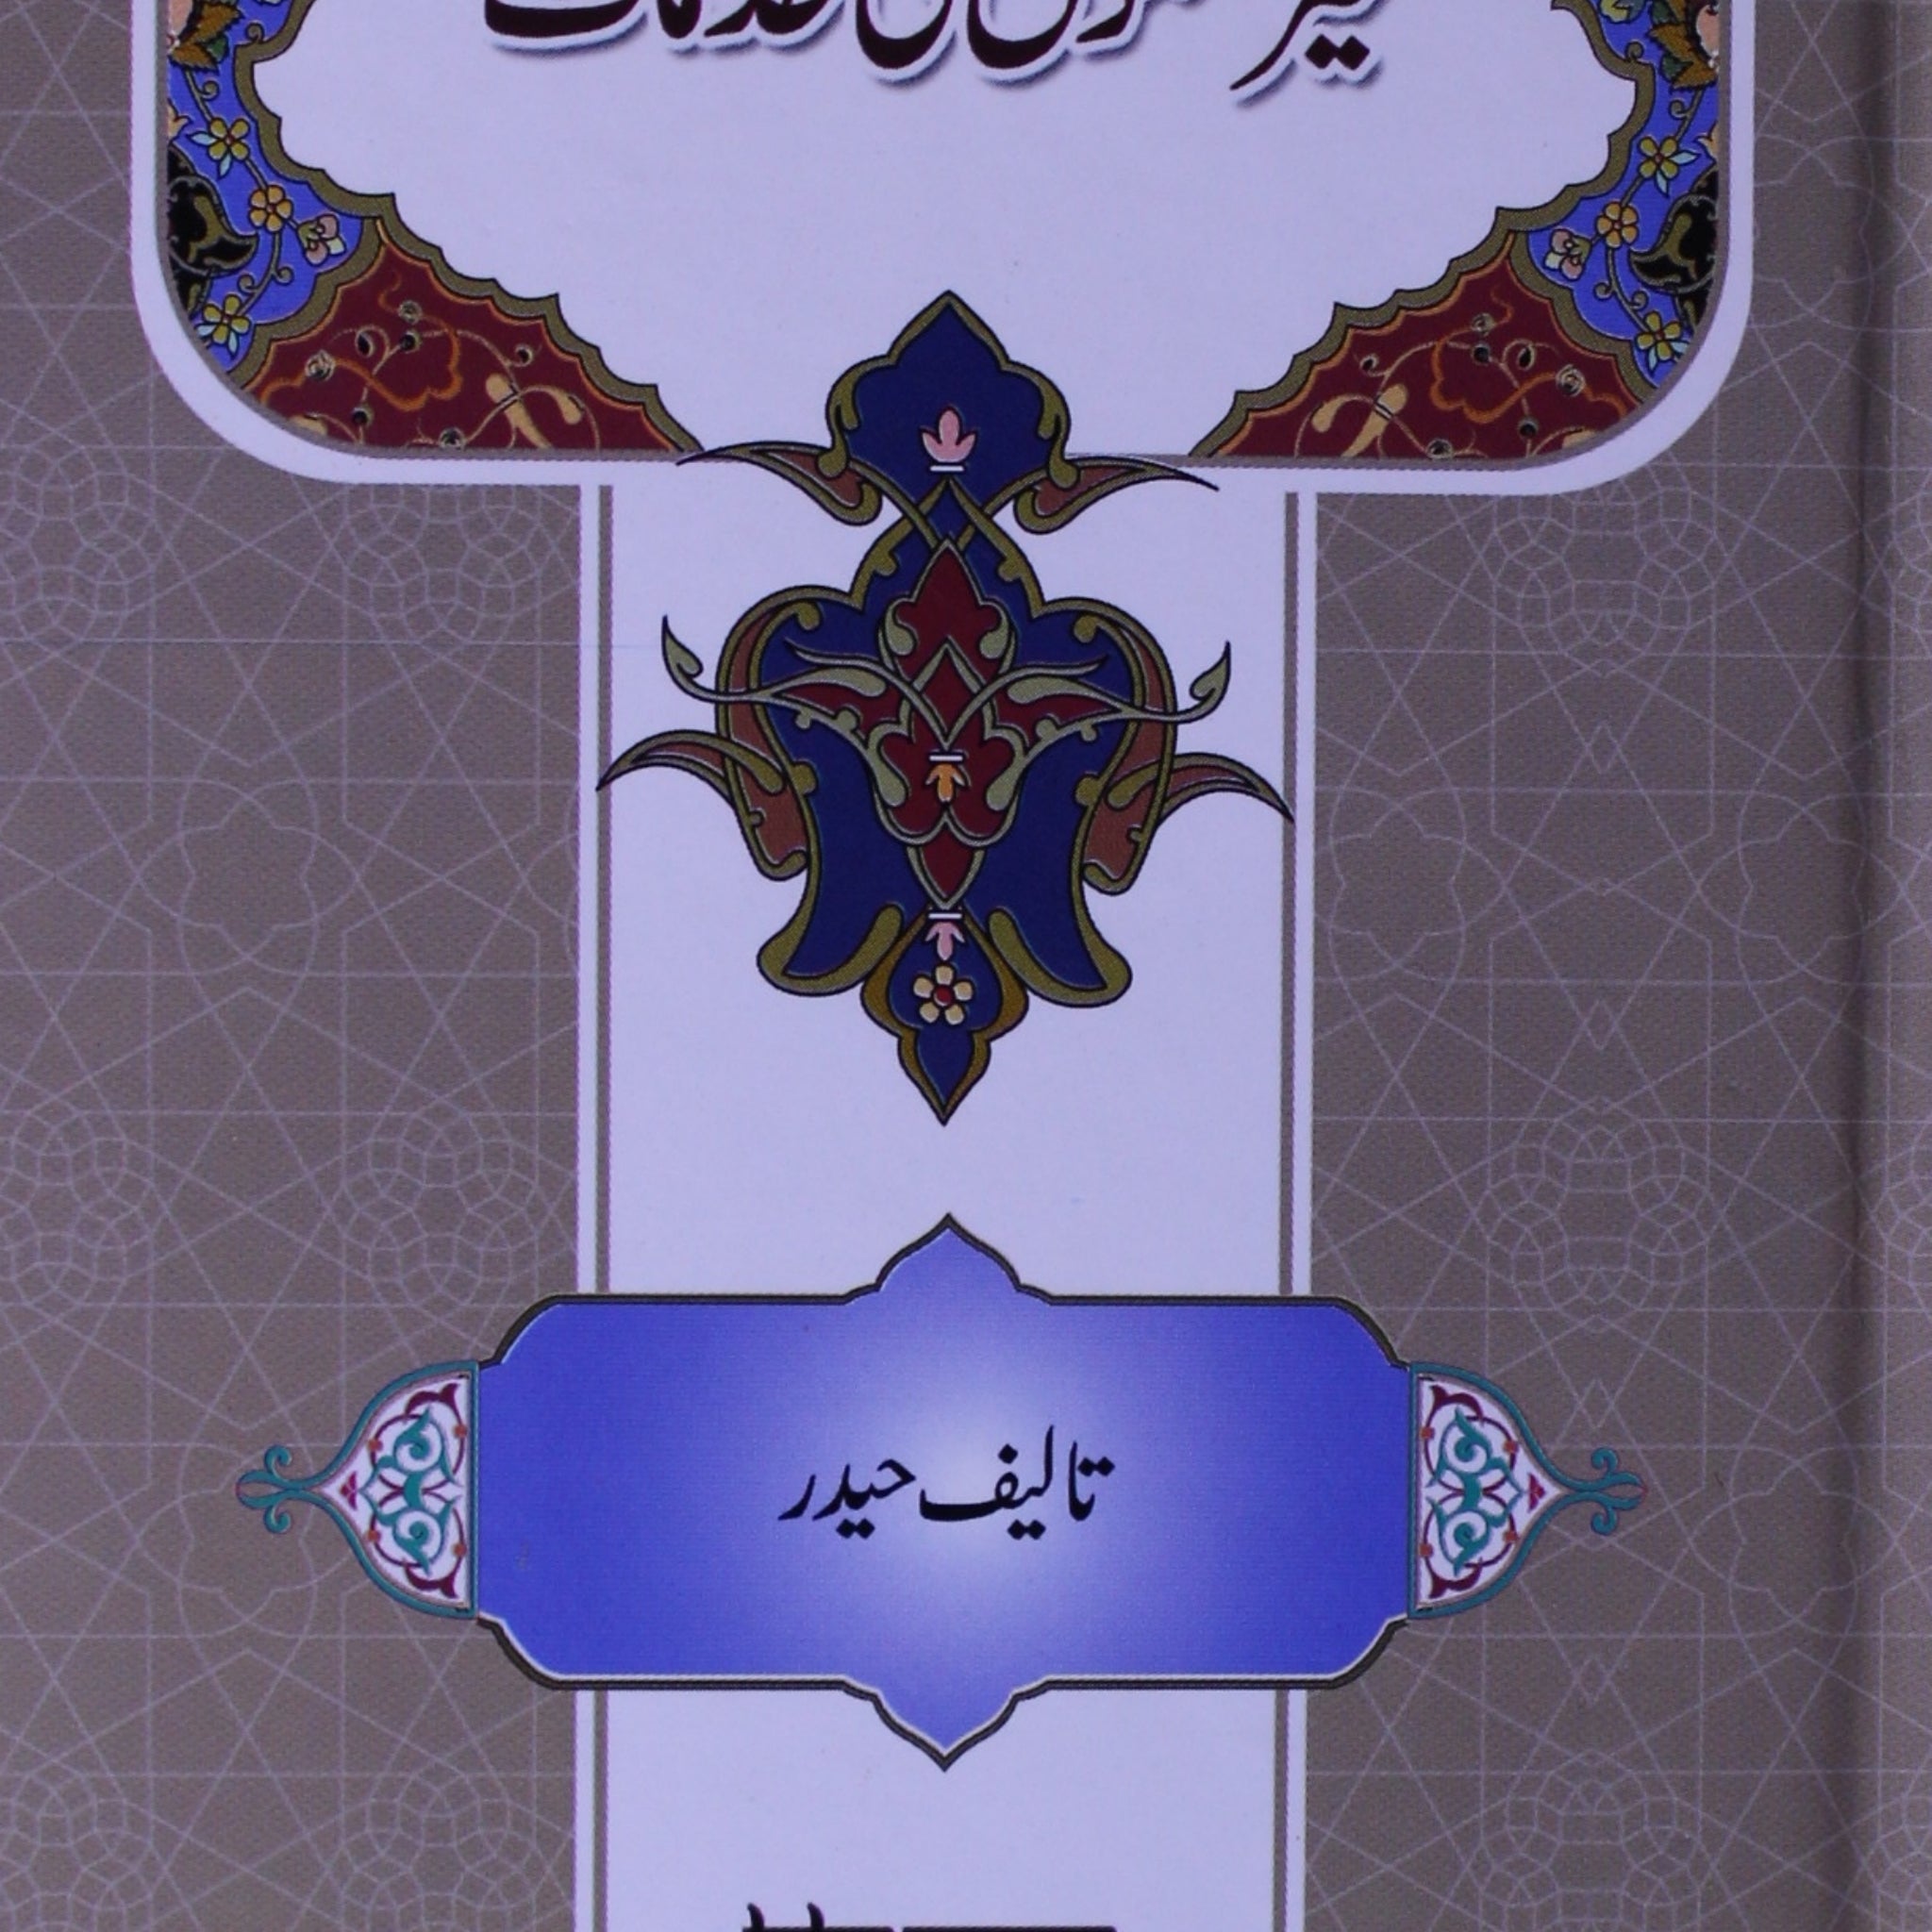 Urdu Ki Tarweej O Isha' At Mein Ghair Muslimon Ki Khidmat